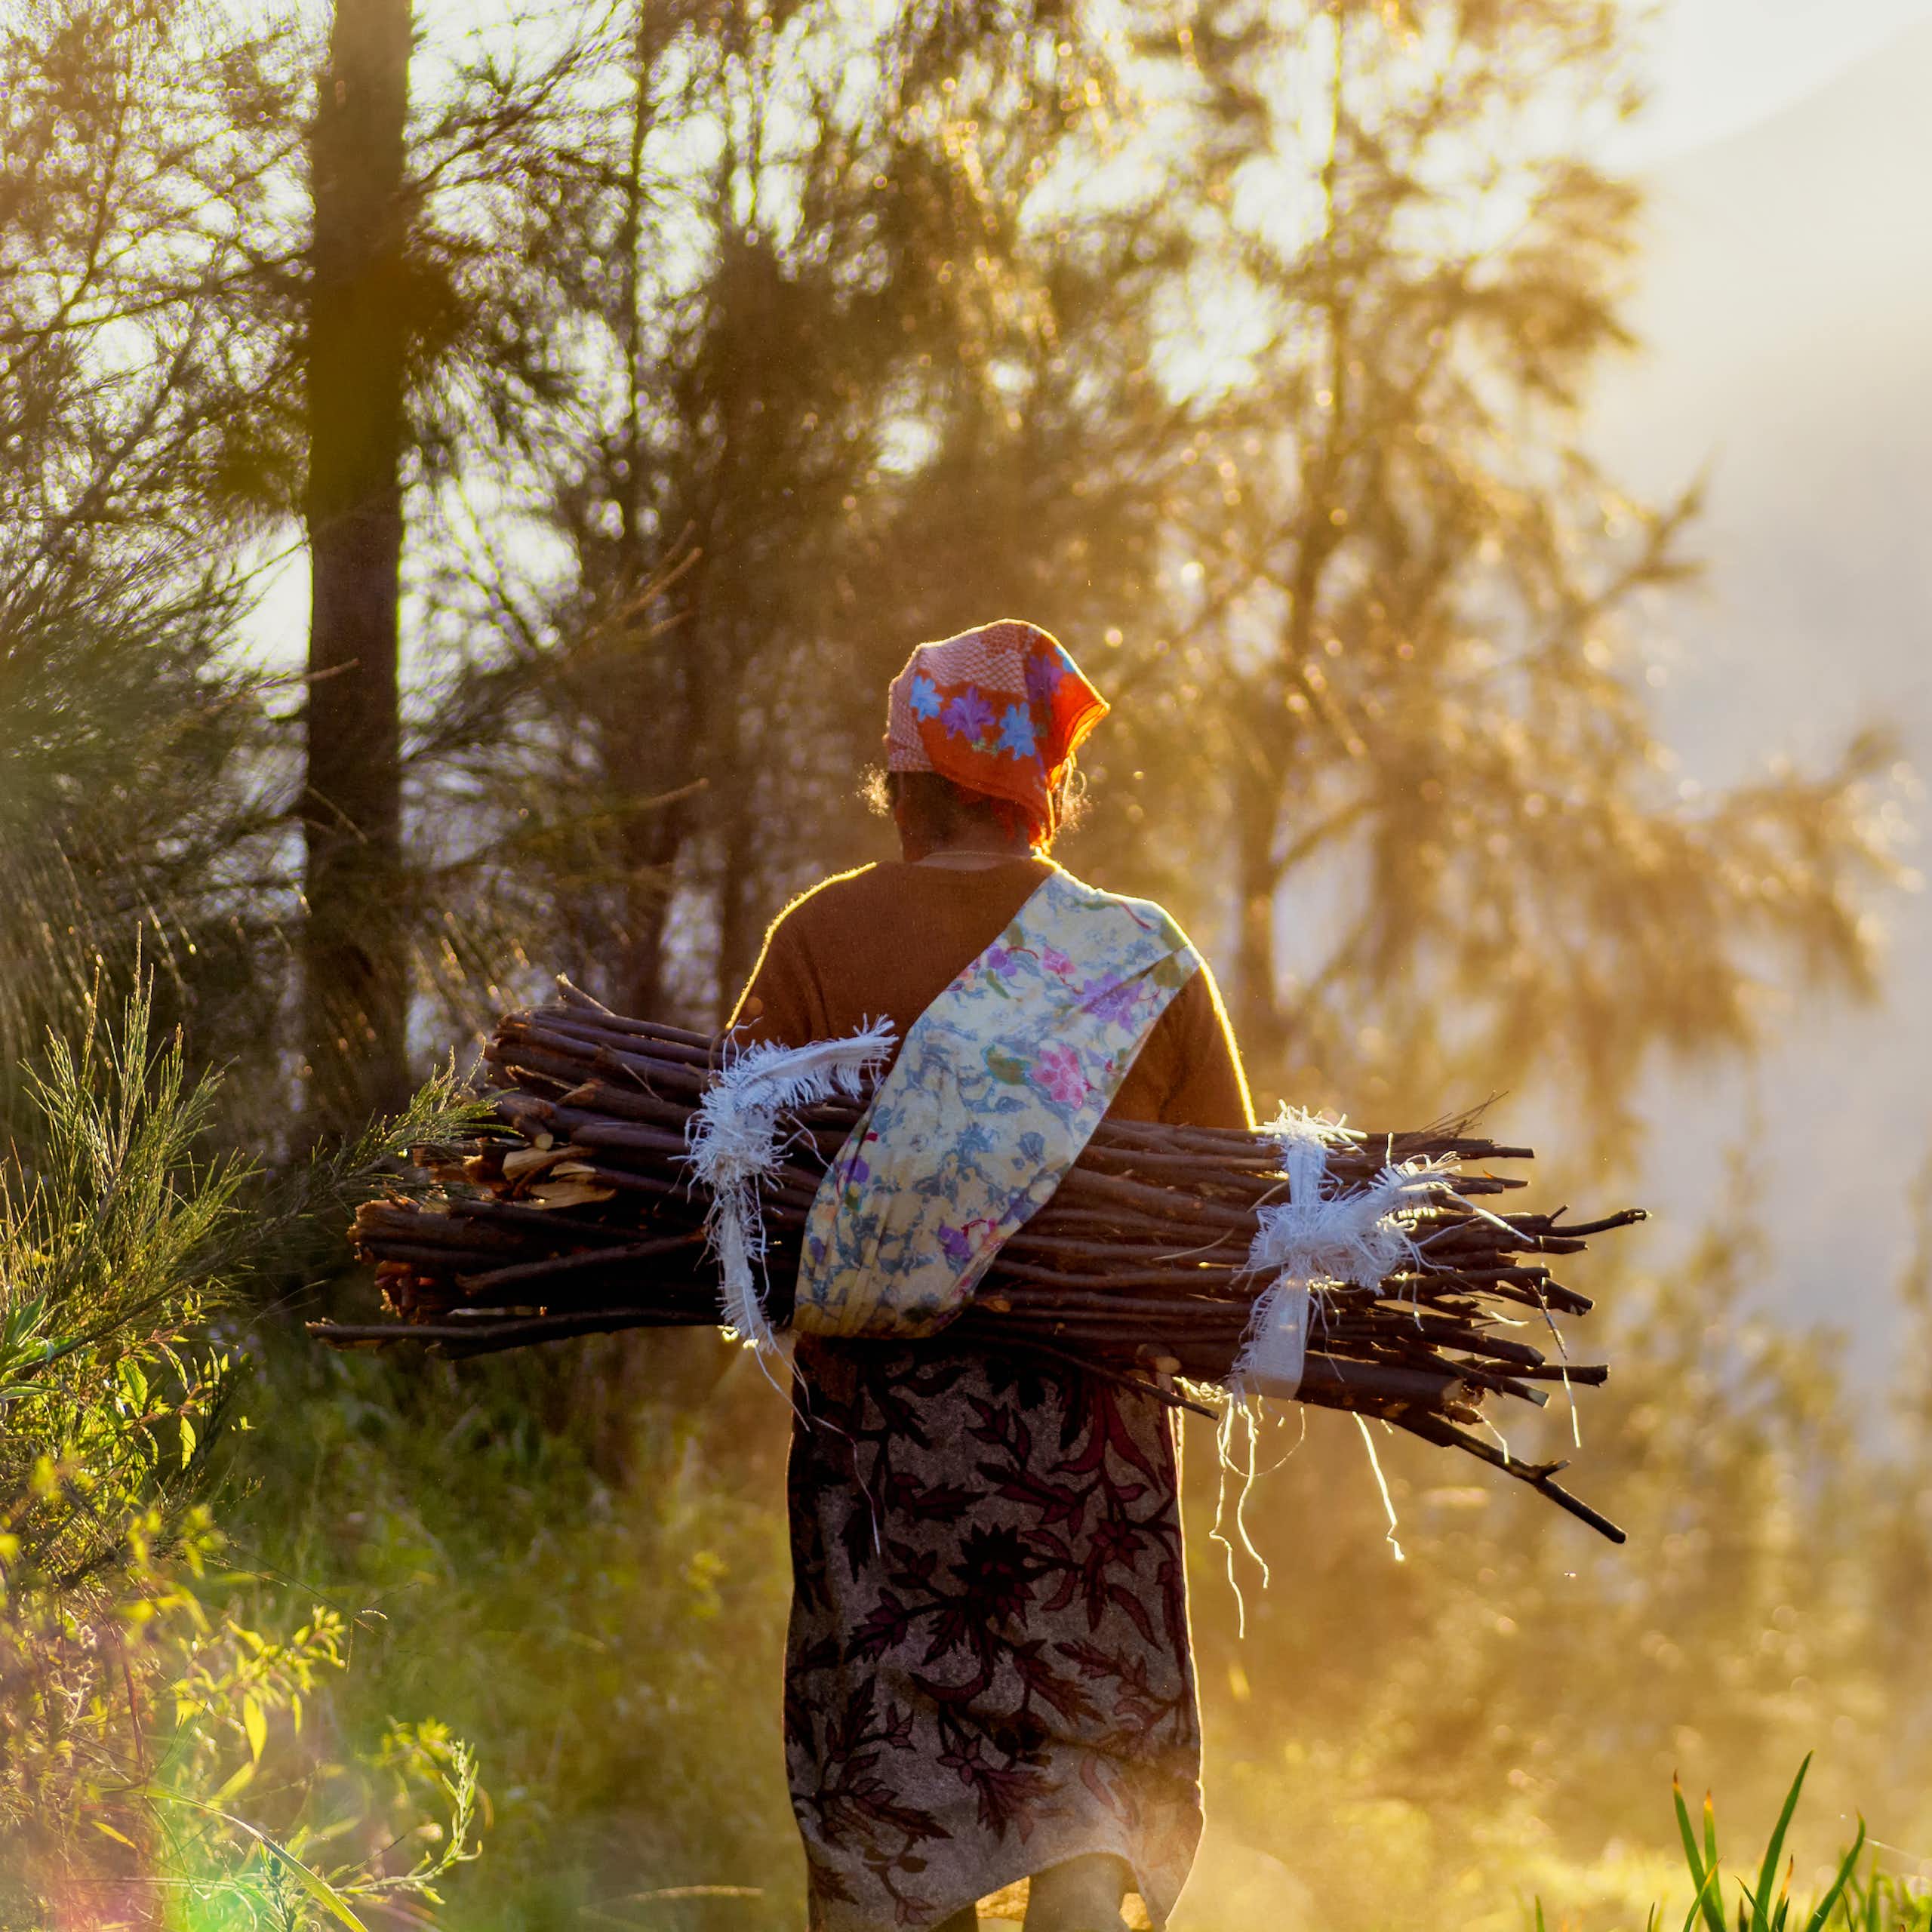 Menggali akar kemiskinan kronis masyarakat kawasan hutan: sebuah tantangan berkelanjutan